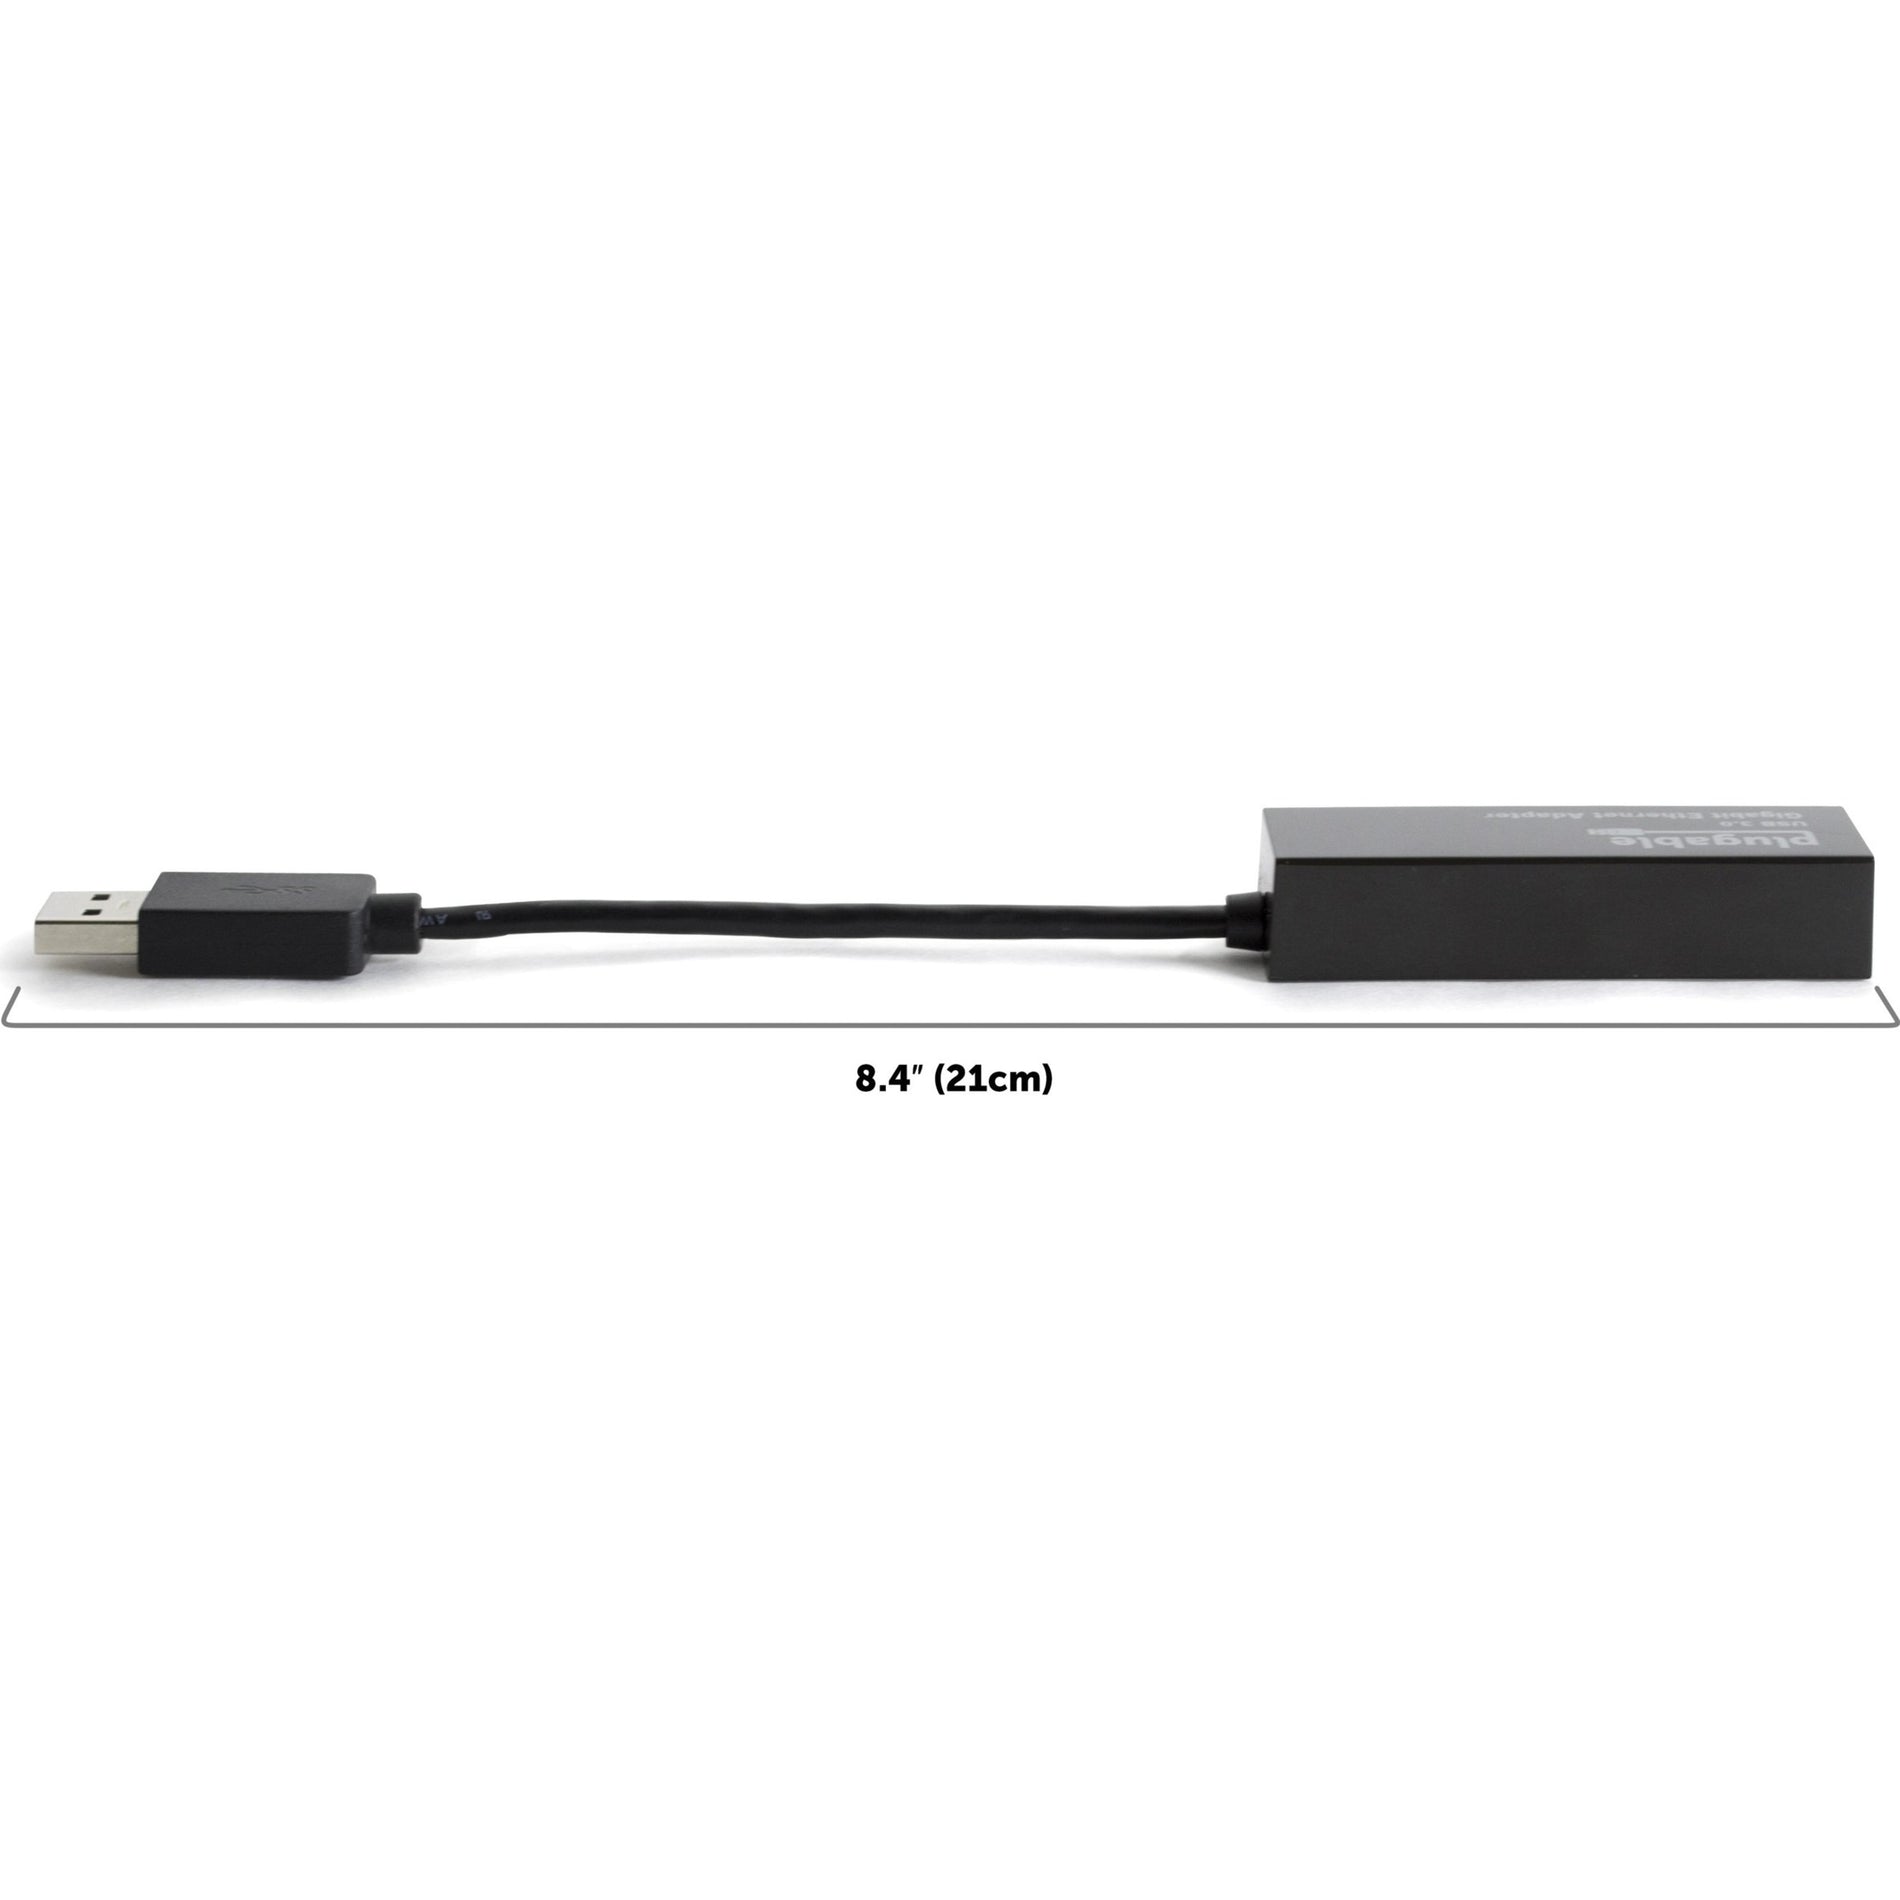 Plugable USB3-E1000 USB to Ethernet Adapter USB 3.0 to Gigabit Ethernet High-Speed Data Transfer